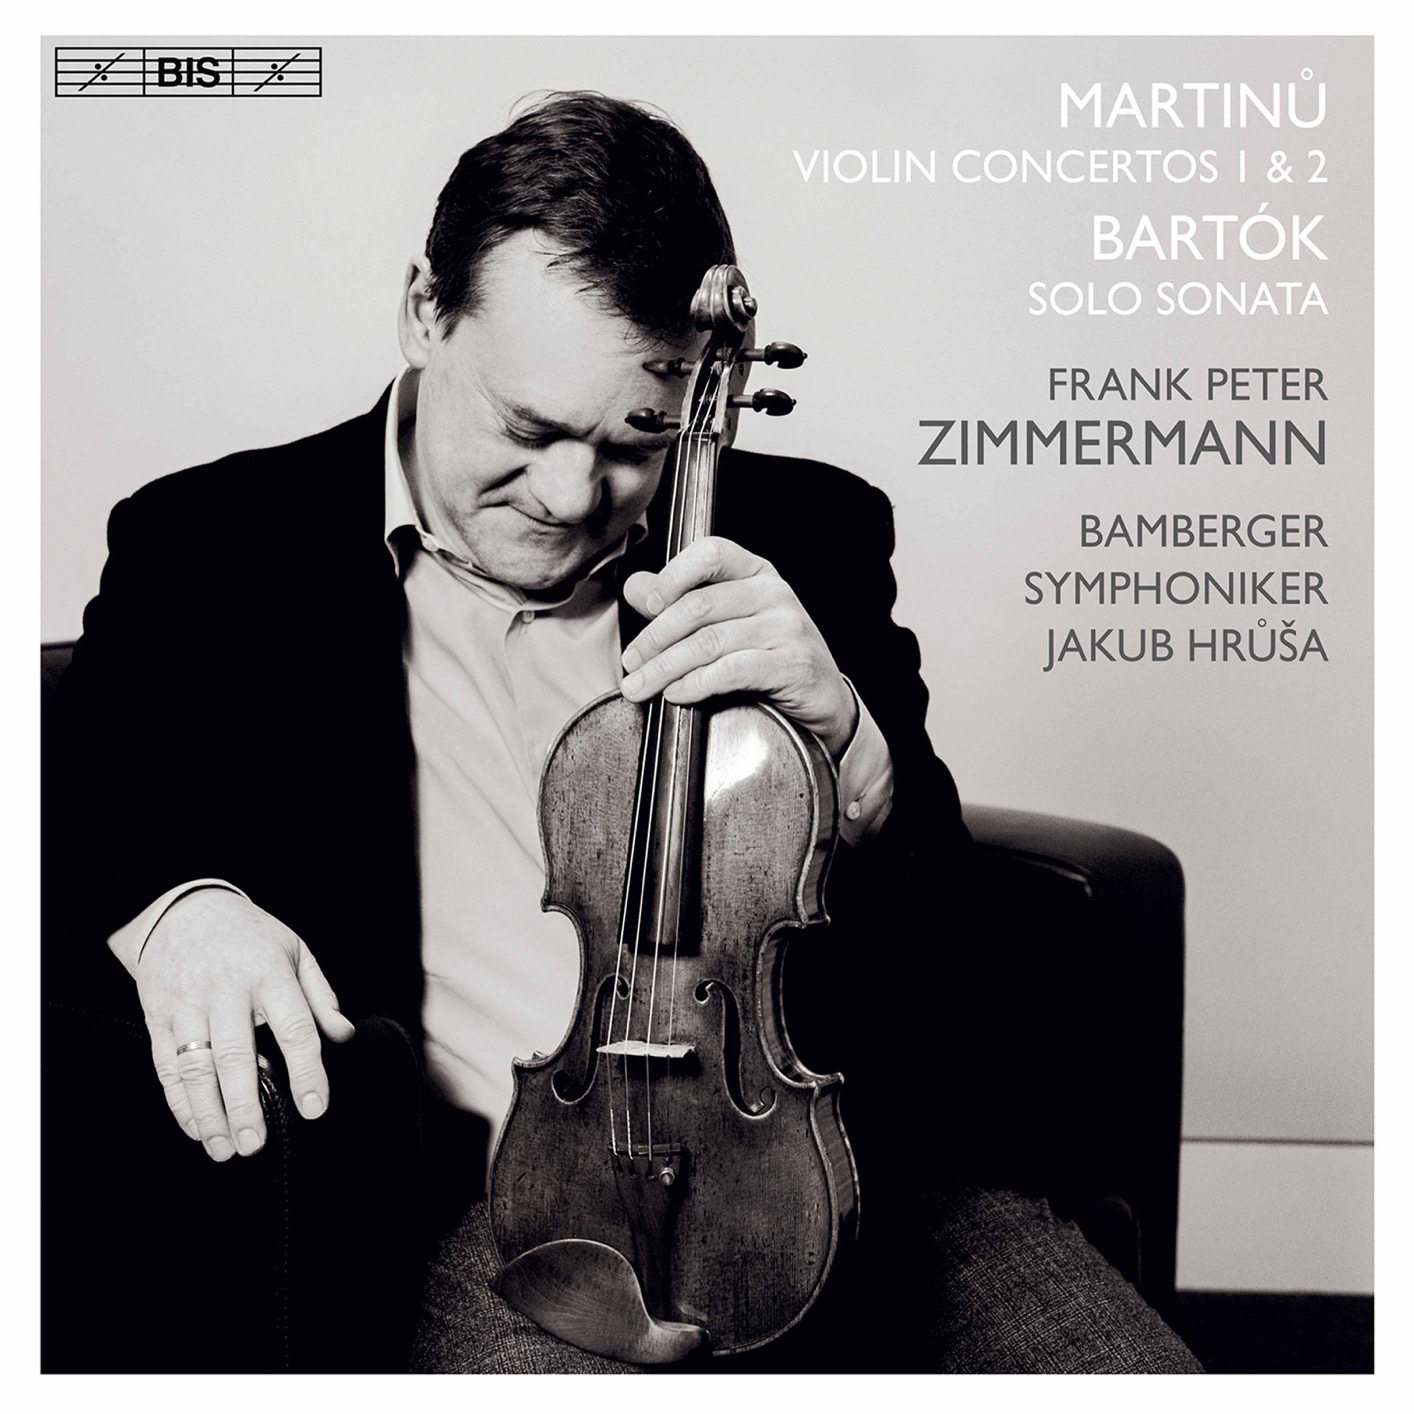 Frank Peter Zimmermann - Martinu - Violin Concertos Nos. 1,2 - Bartok - Sonata for Solo Violin (2020) [FLAC 24bit/96kHz]